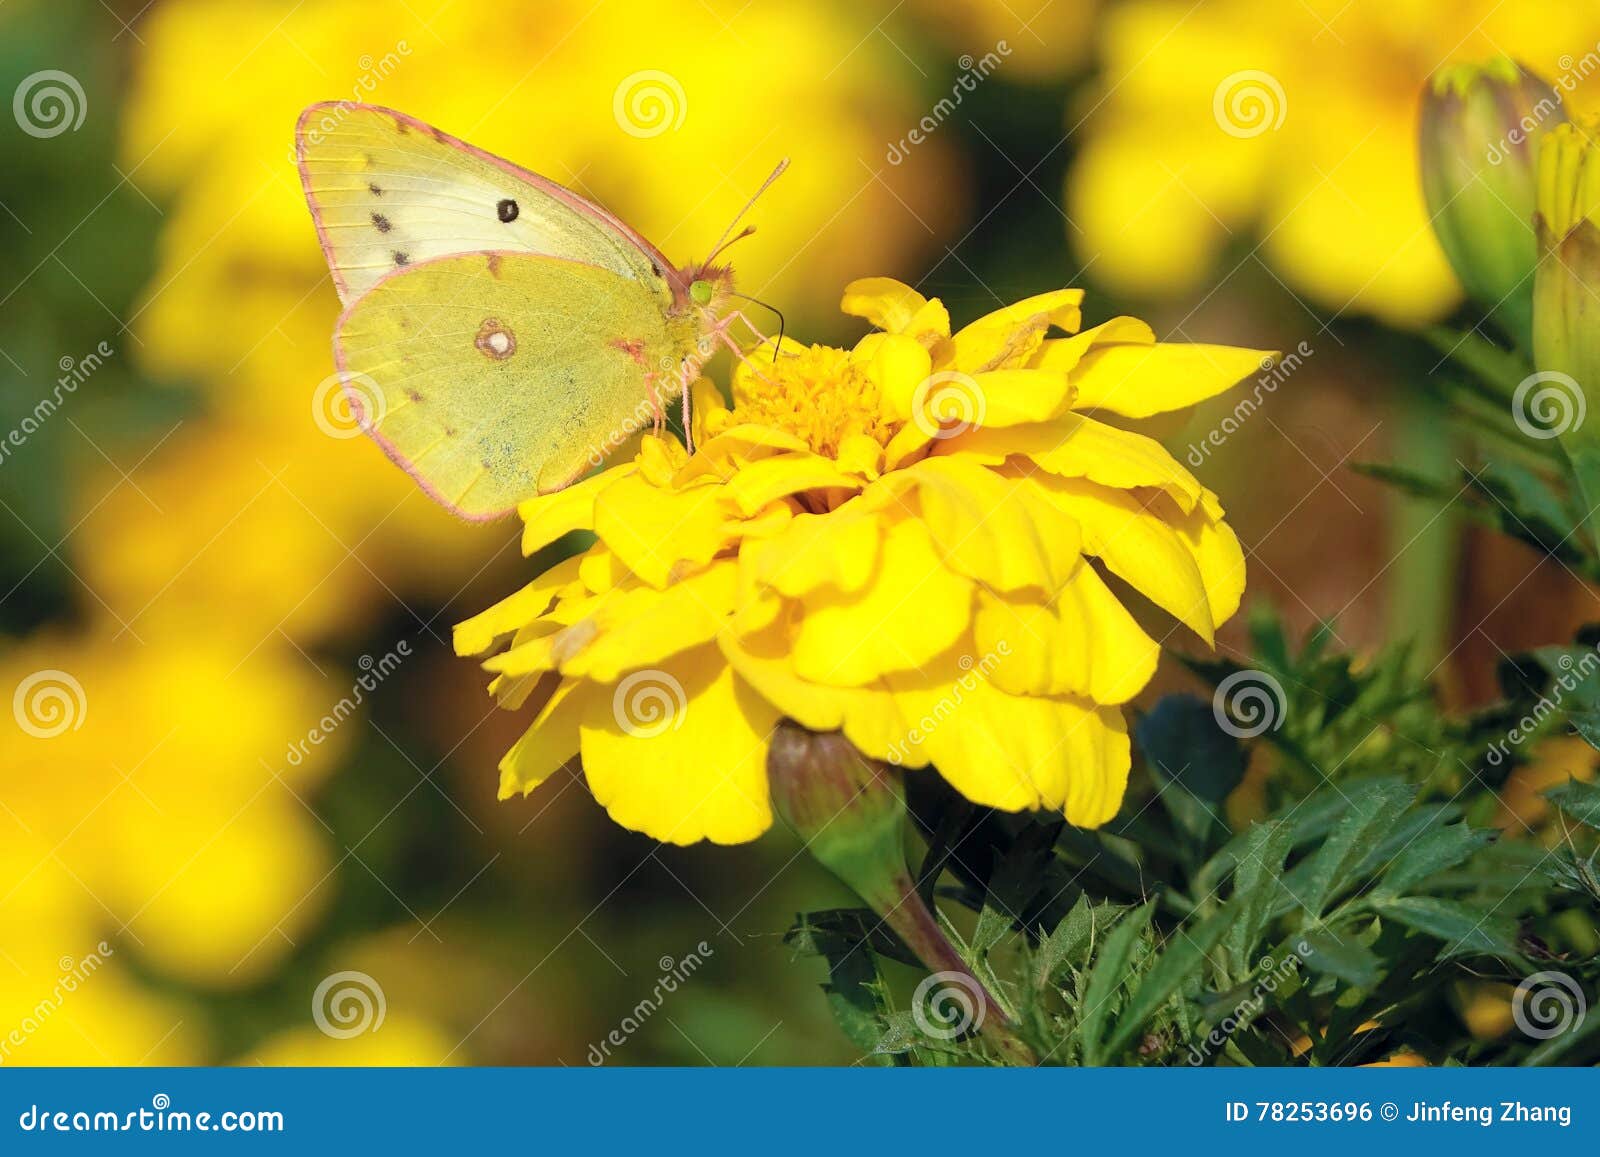 pieridae butterfly